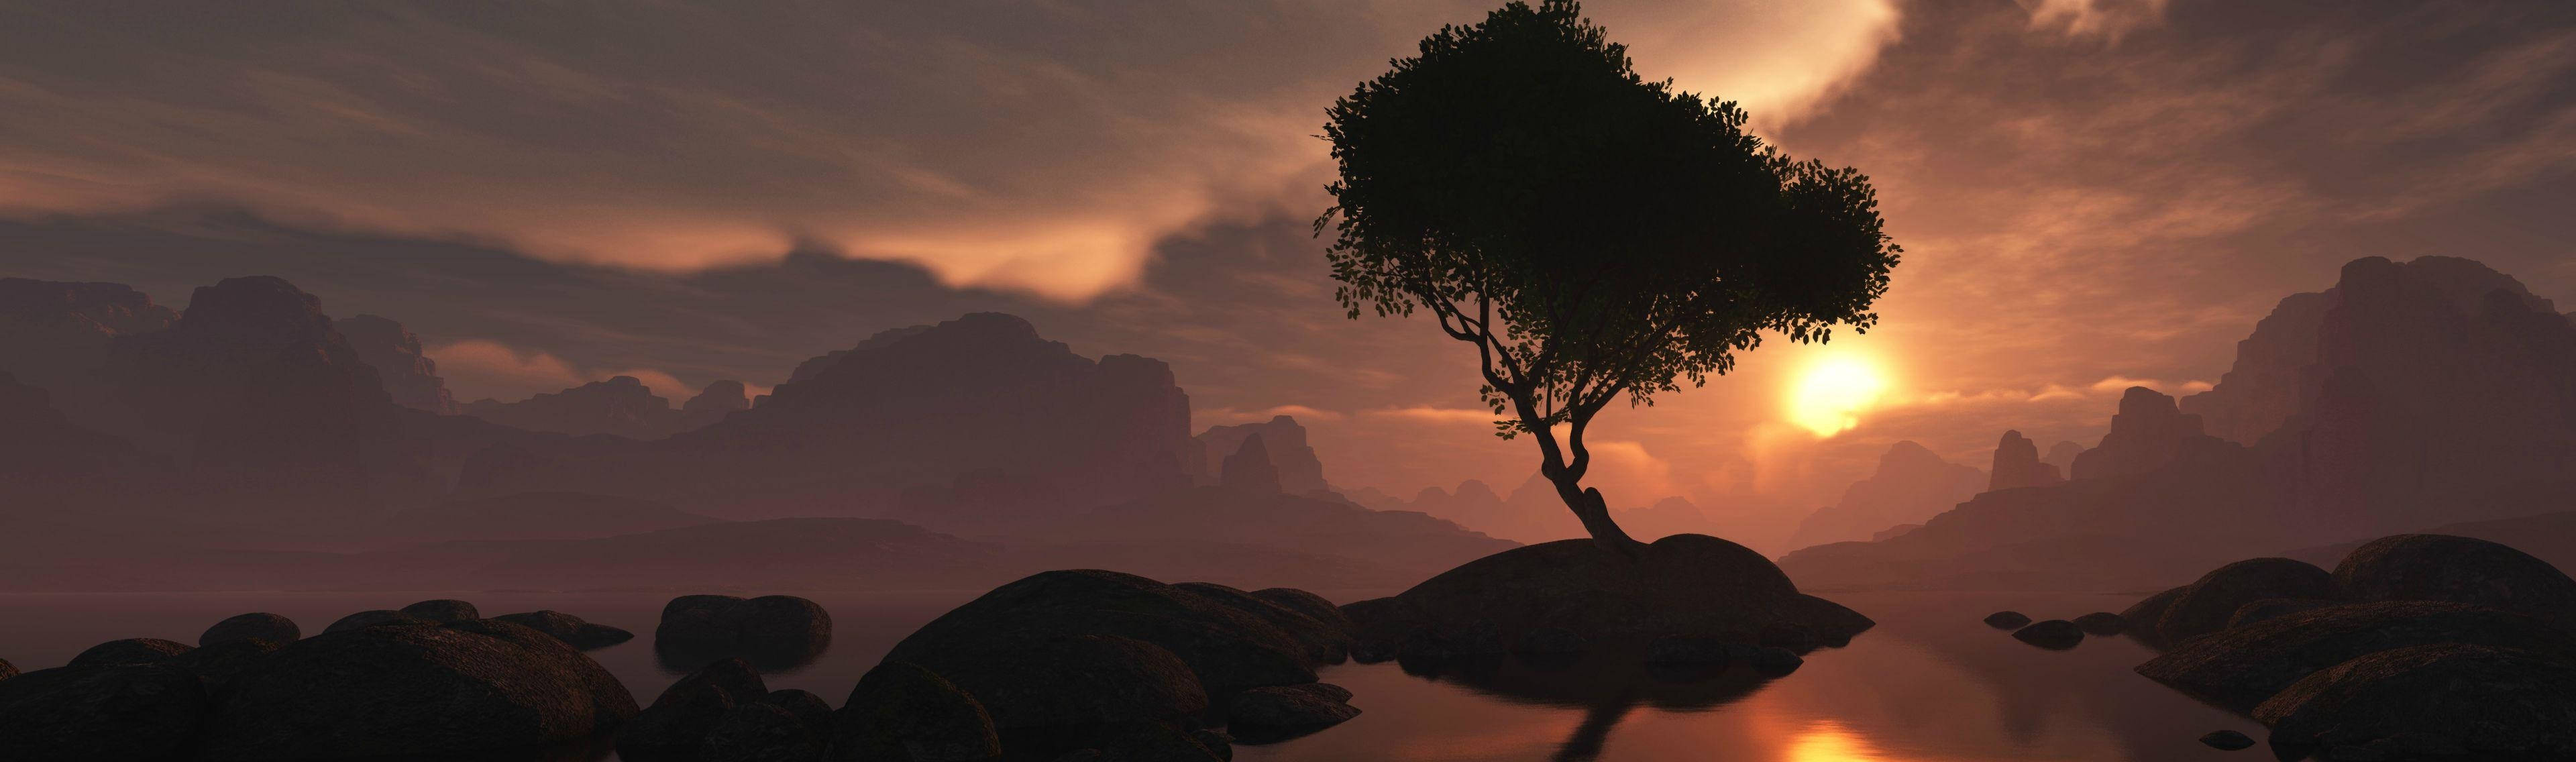 4K Dual Monitor Tree On Mountain Edge At Sunset Wallpaper